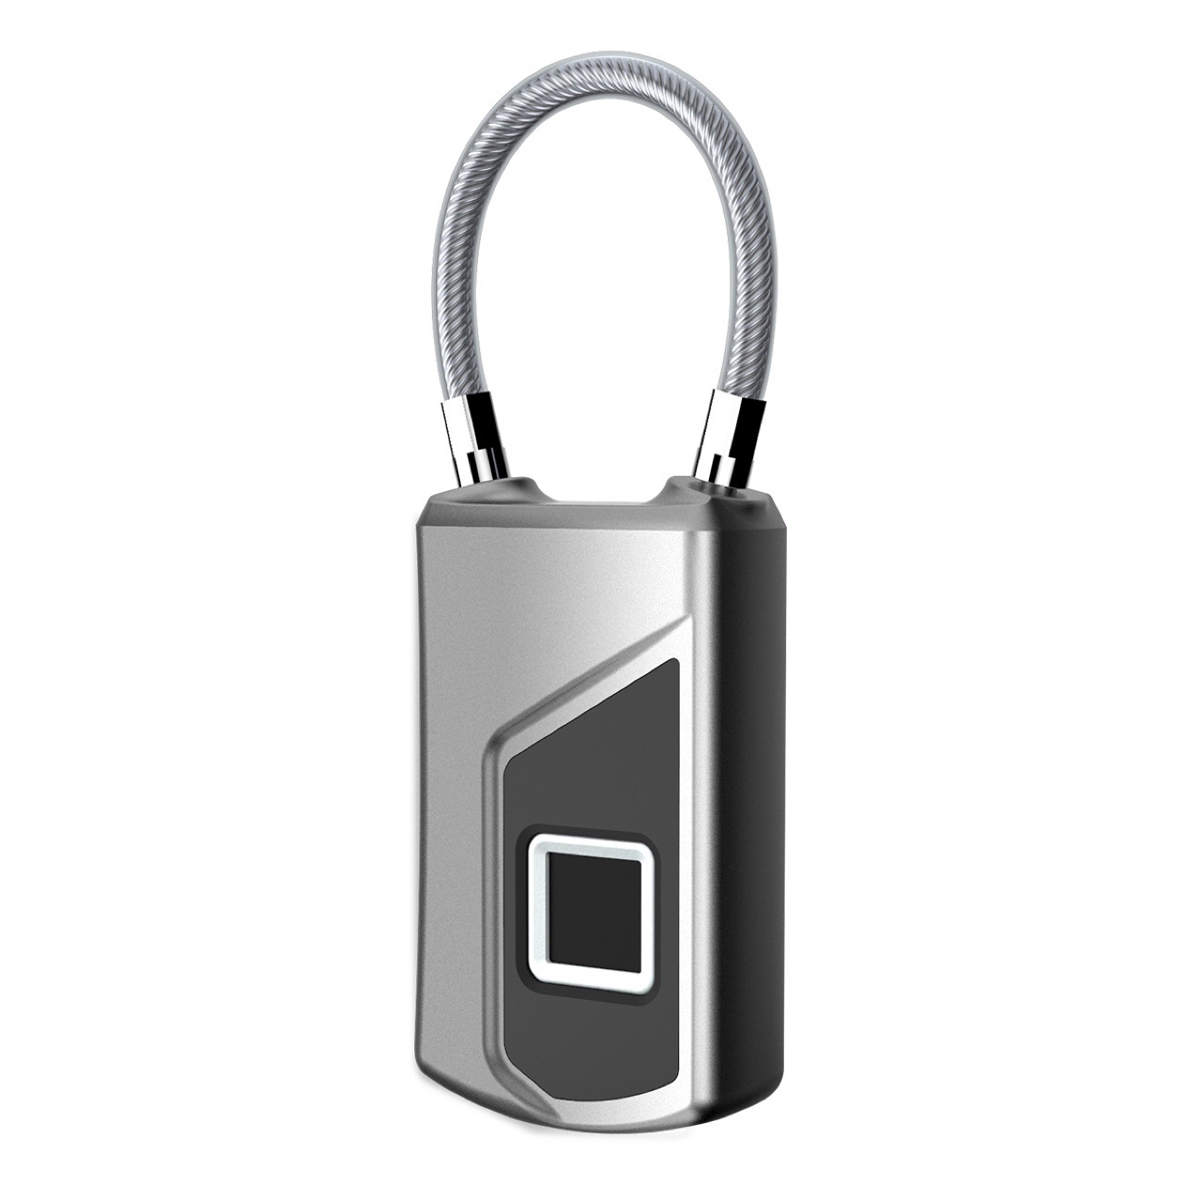 Anytek L1 Waterproof Smart Fingerprint Padlock Keyless Door Lock USB Charge Anti-Theft